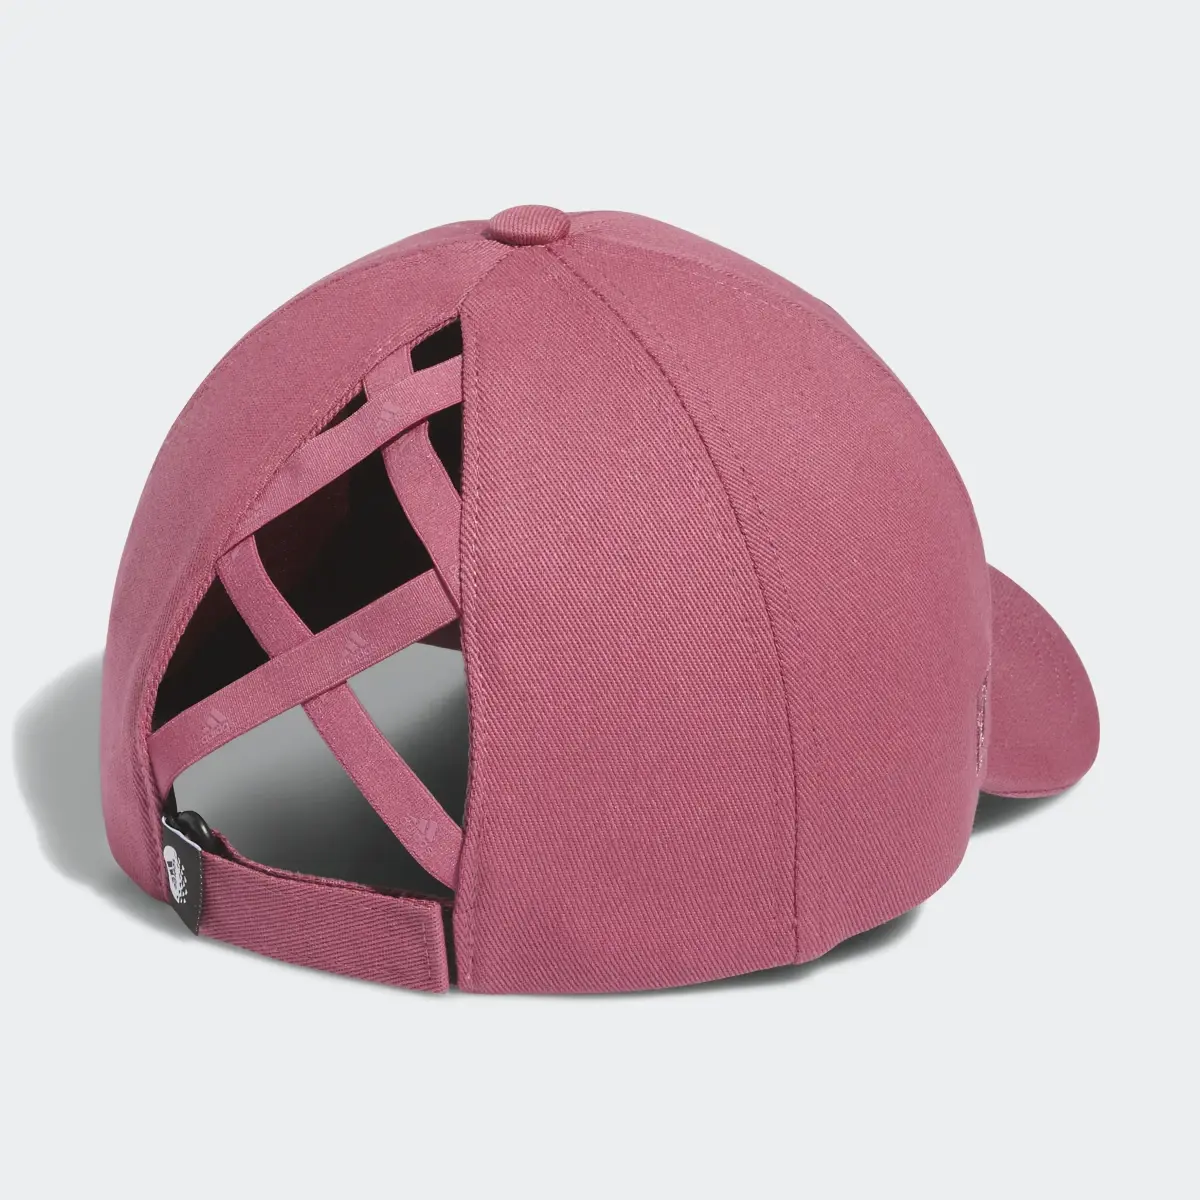 Adidas Criscross Golf Hat. 3